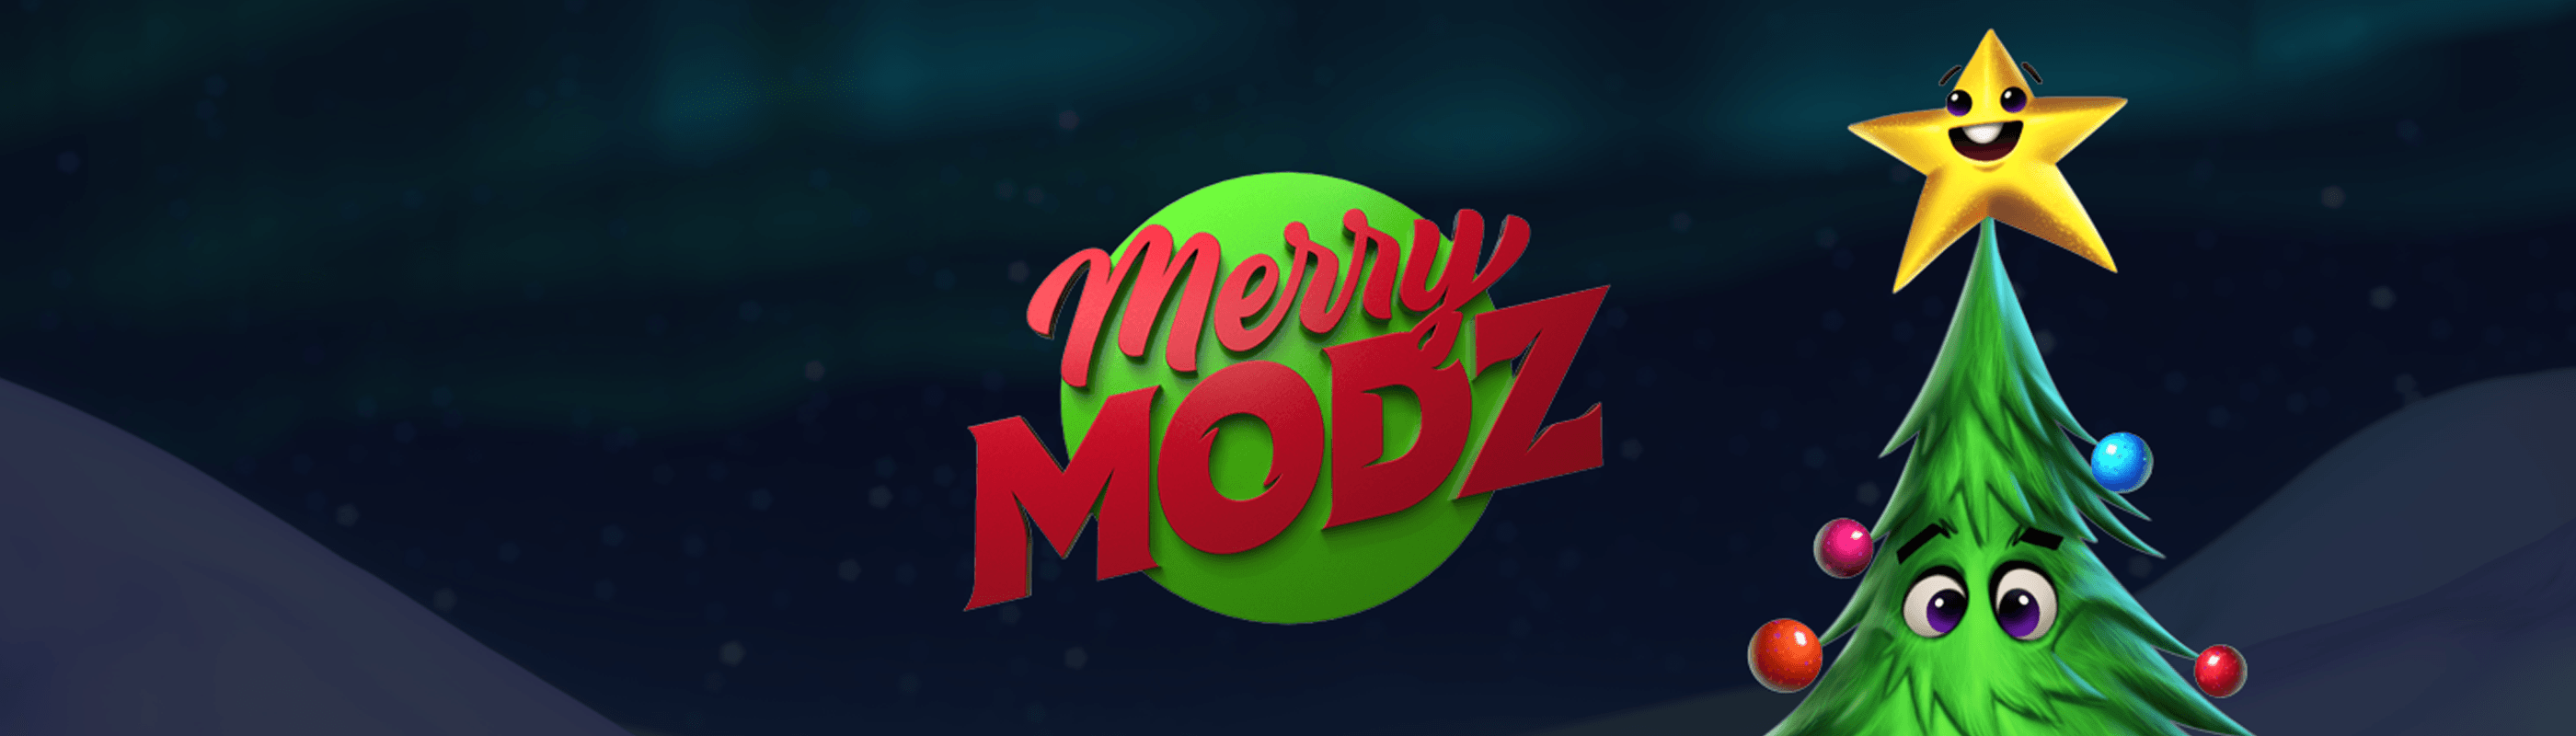 Merry Modz Bark